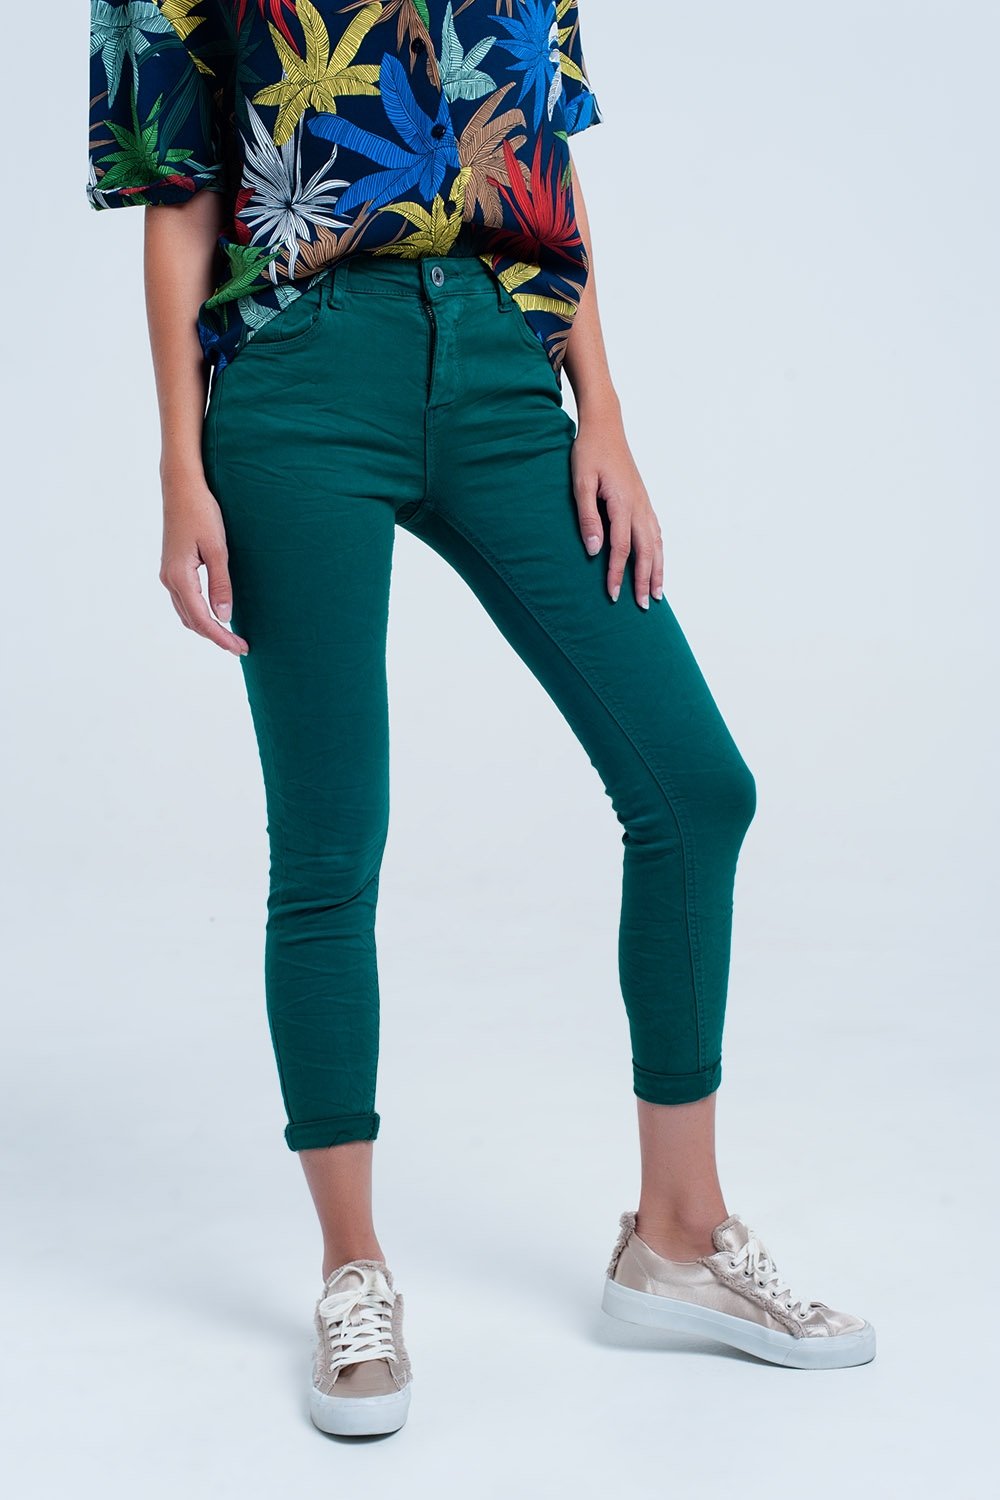 Skinny Green Elastic Jeans